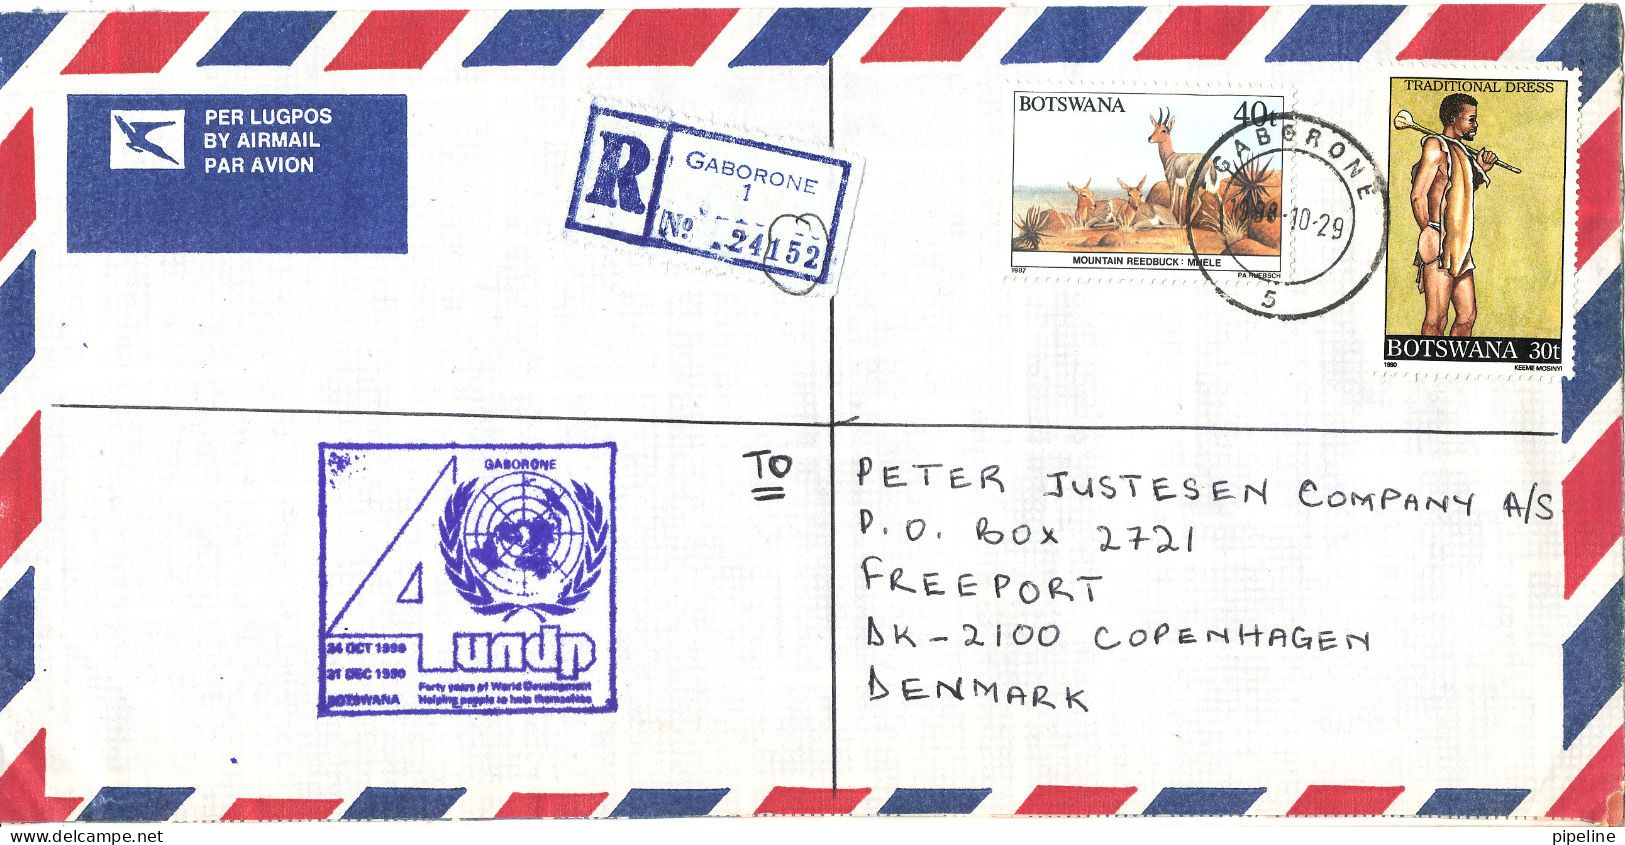 Botswana Registered Air Mail Cover Sent To Denmark 29-10-1988 Topic Stamps - Botswana (1966-...)